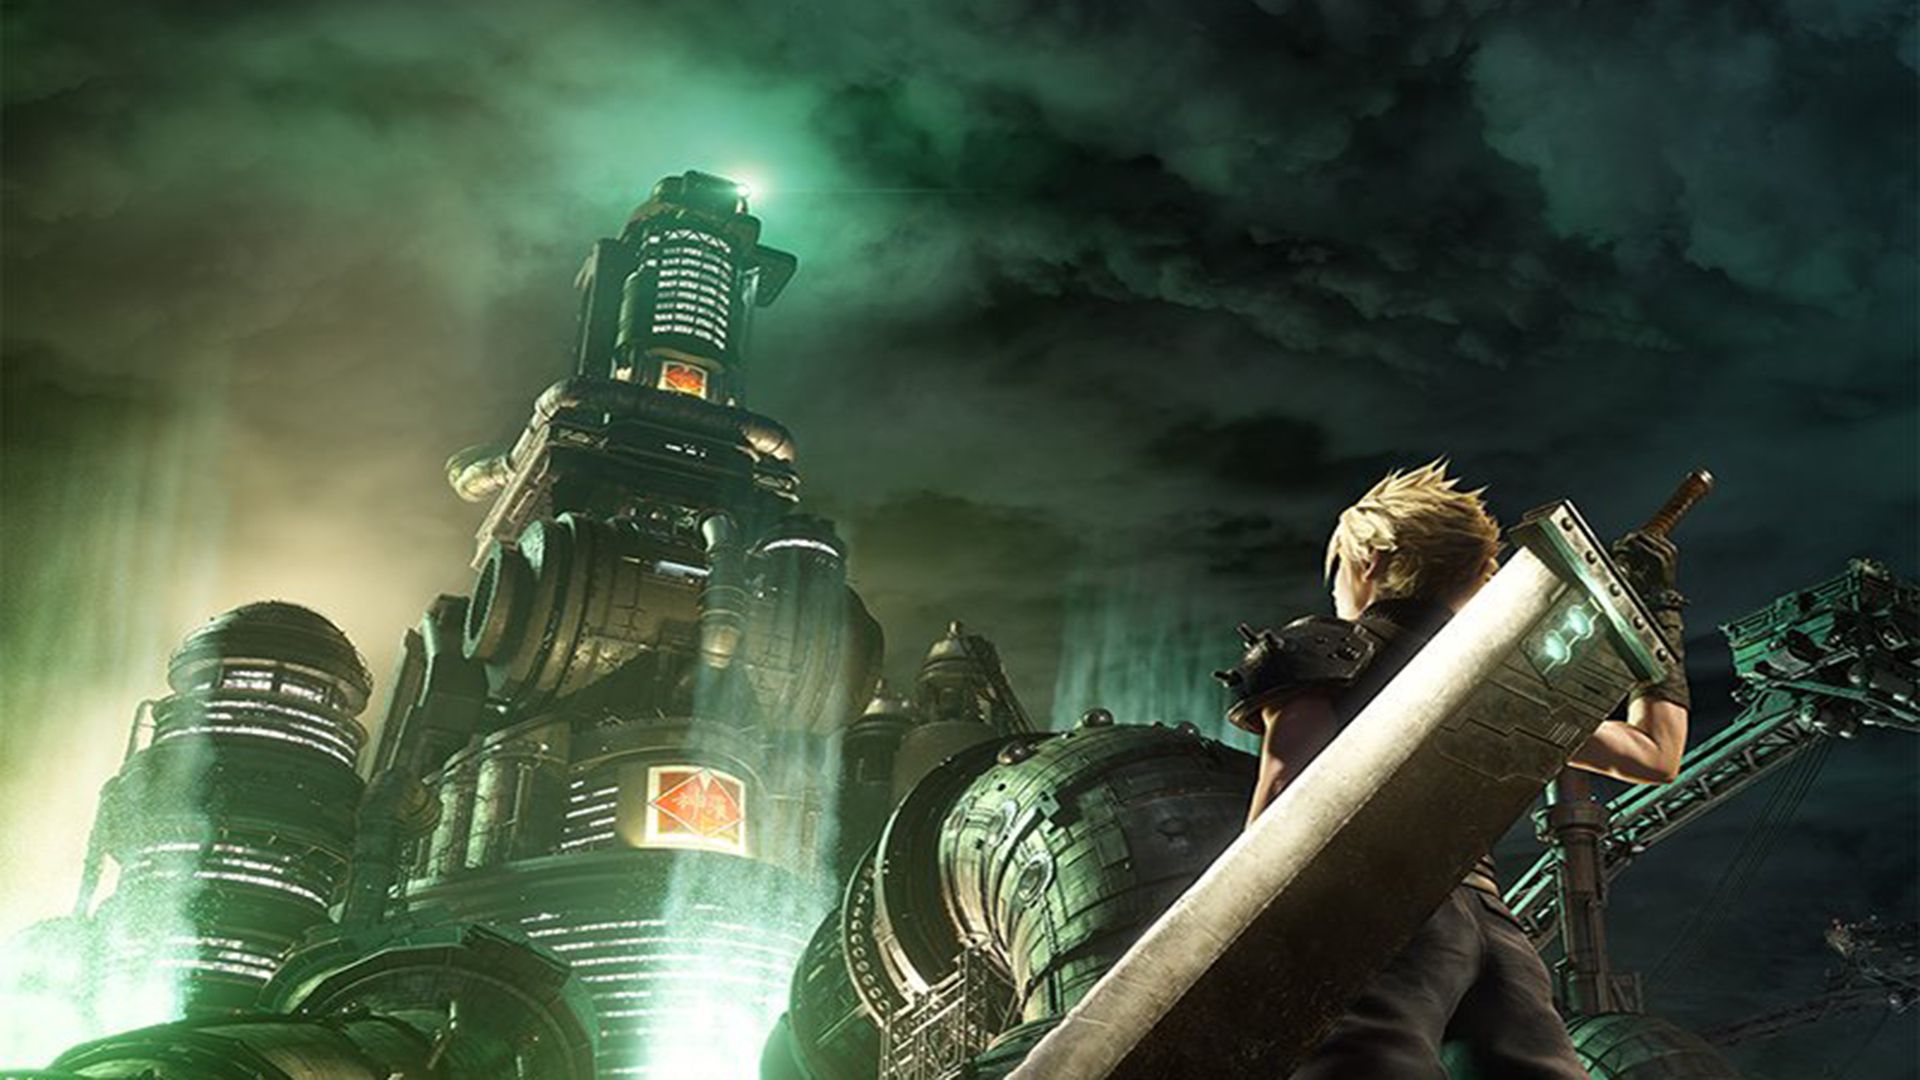 Final Fantasy 7 remake celebrates the anniversary of the original